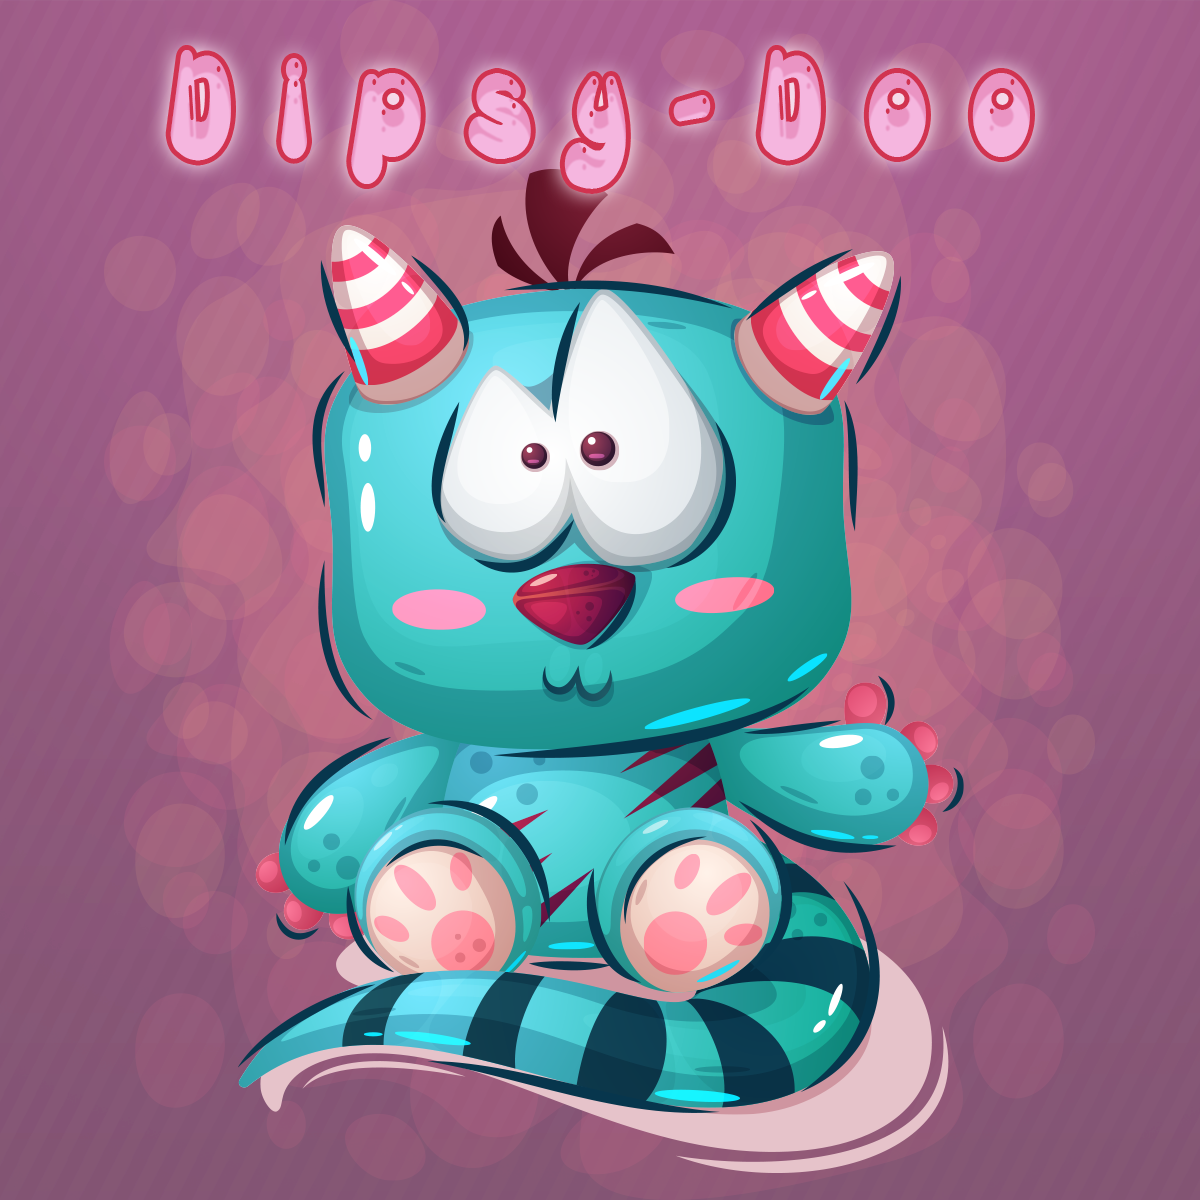 Dipsy-Doo